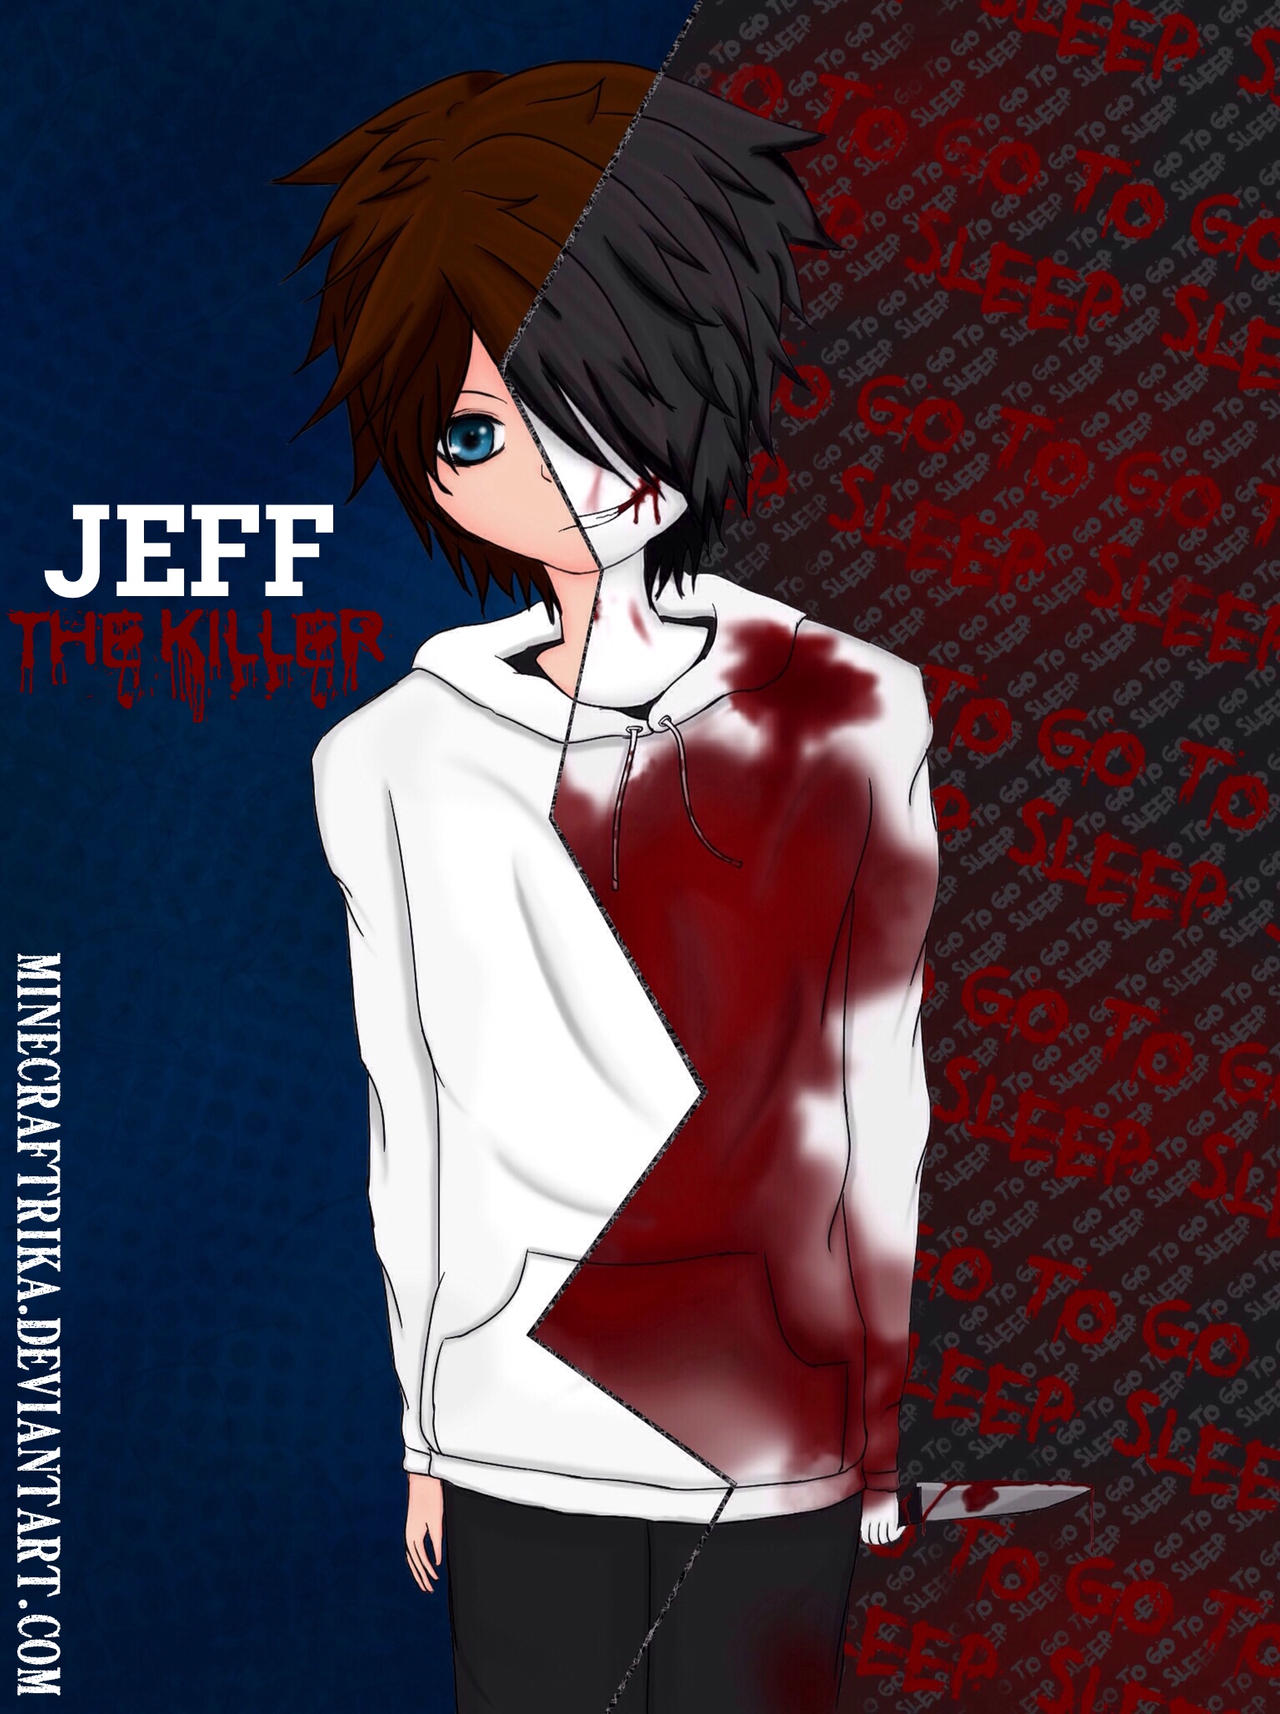 Jeff the killer. by Mjjloverr on DeviantArt